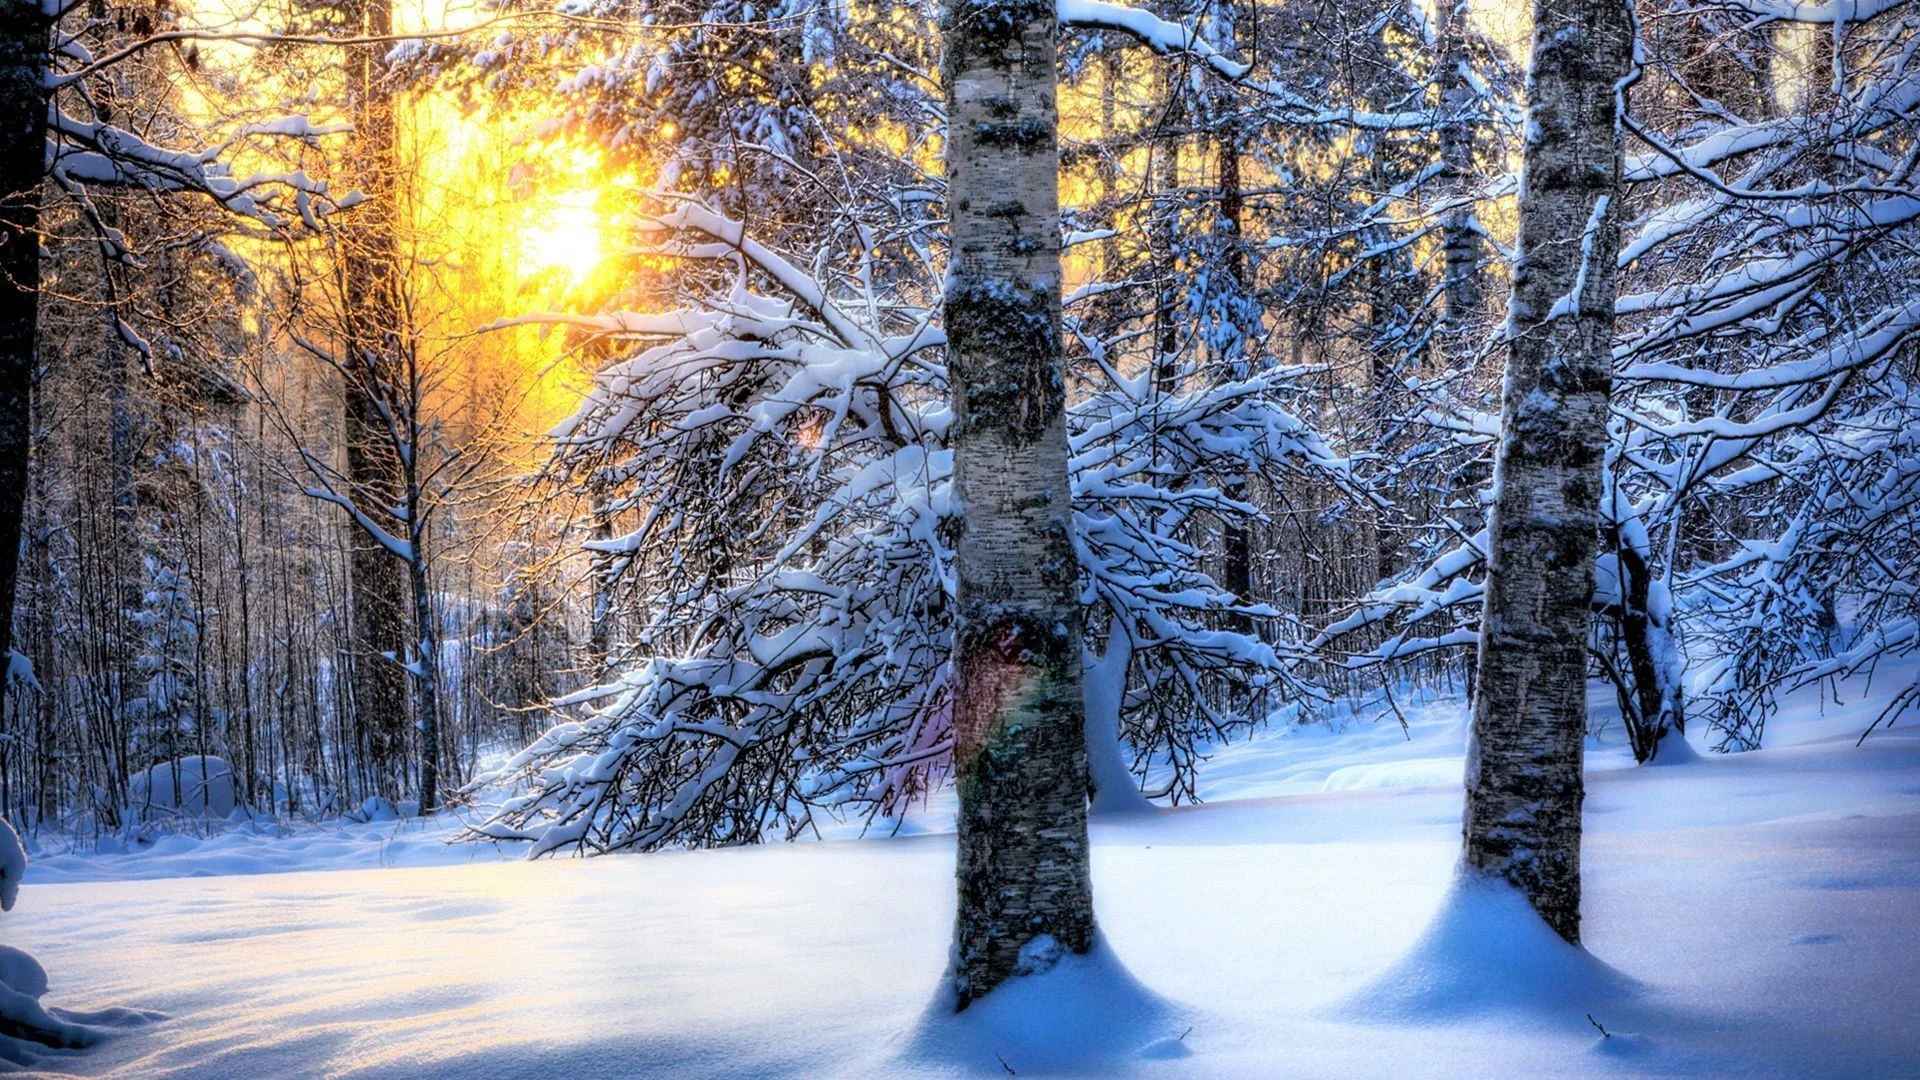 Winter Forest Desktop Wallpaper, Winter Forest Pictures